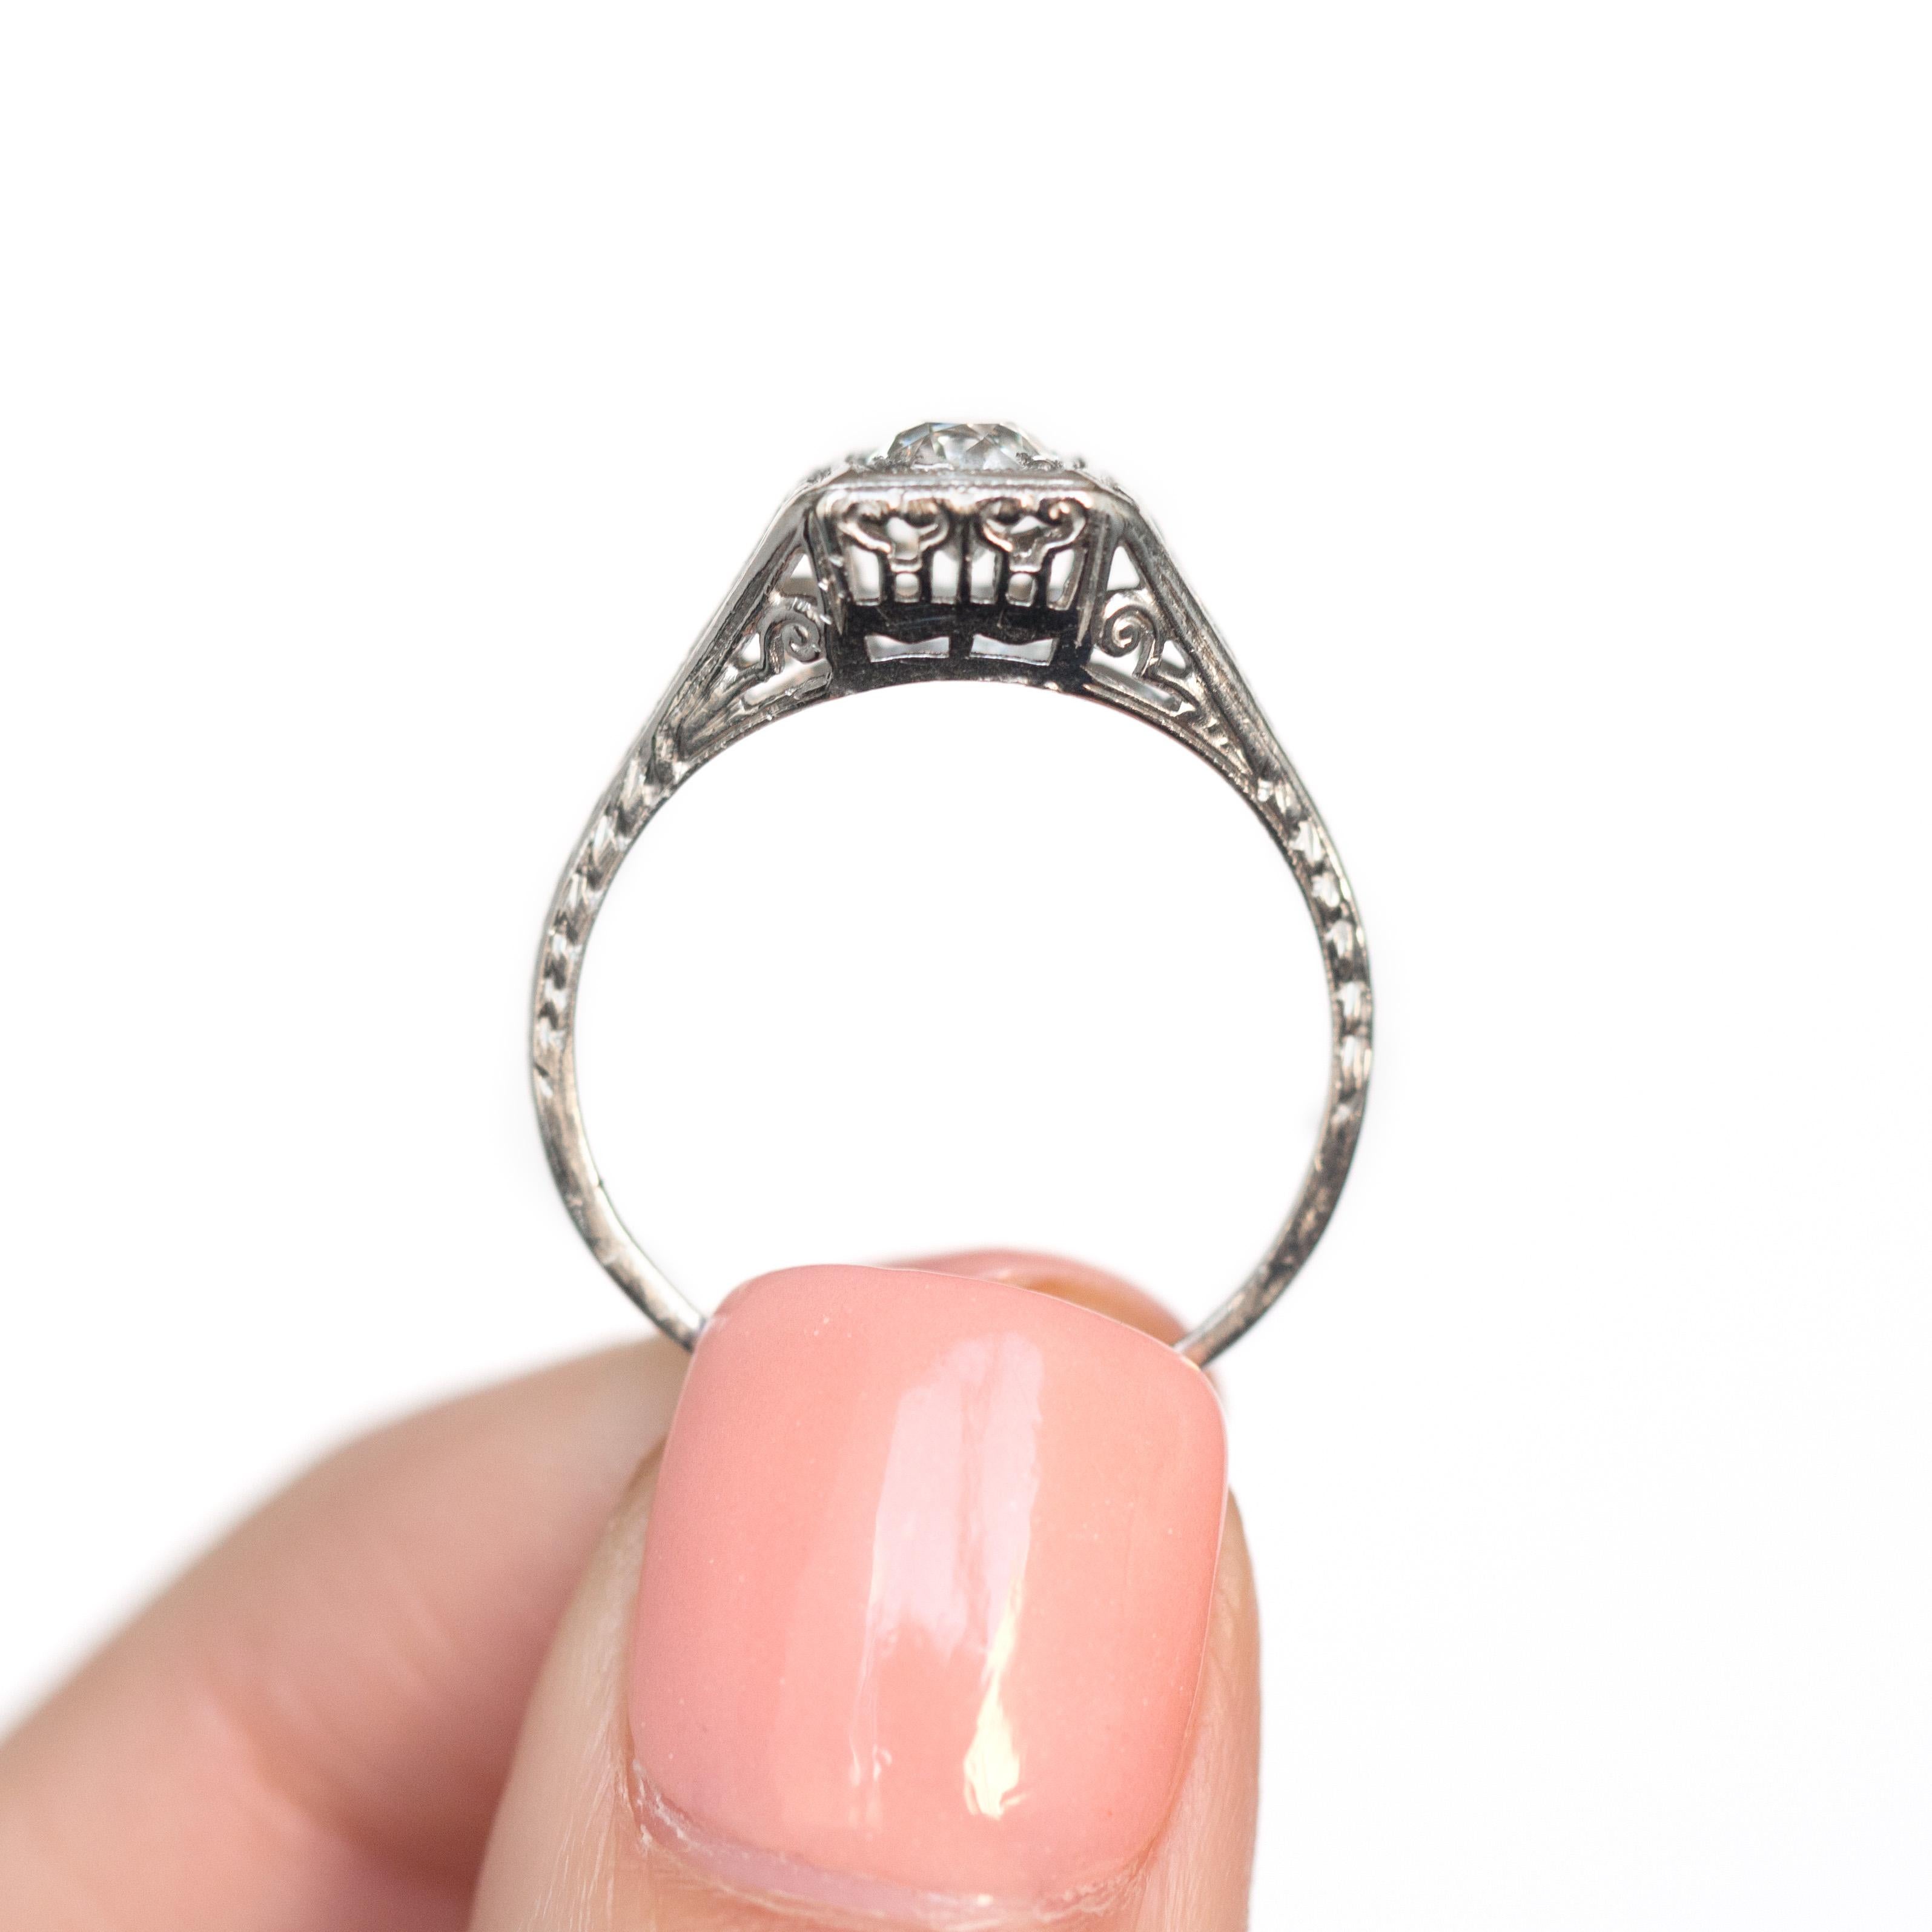 44 carat diamond ring